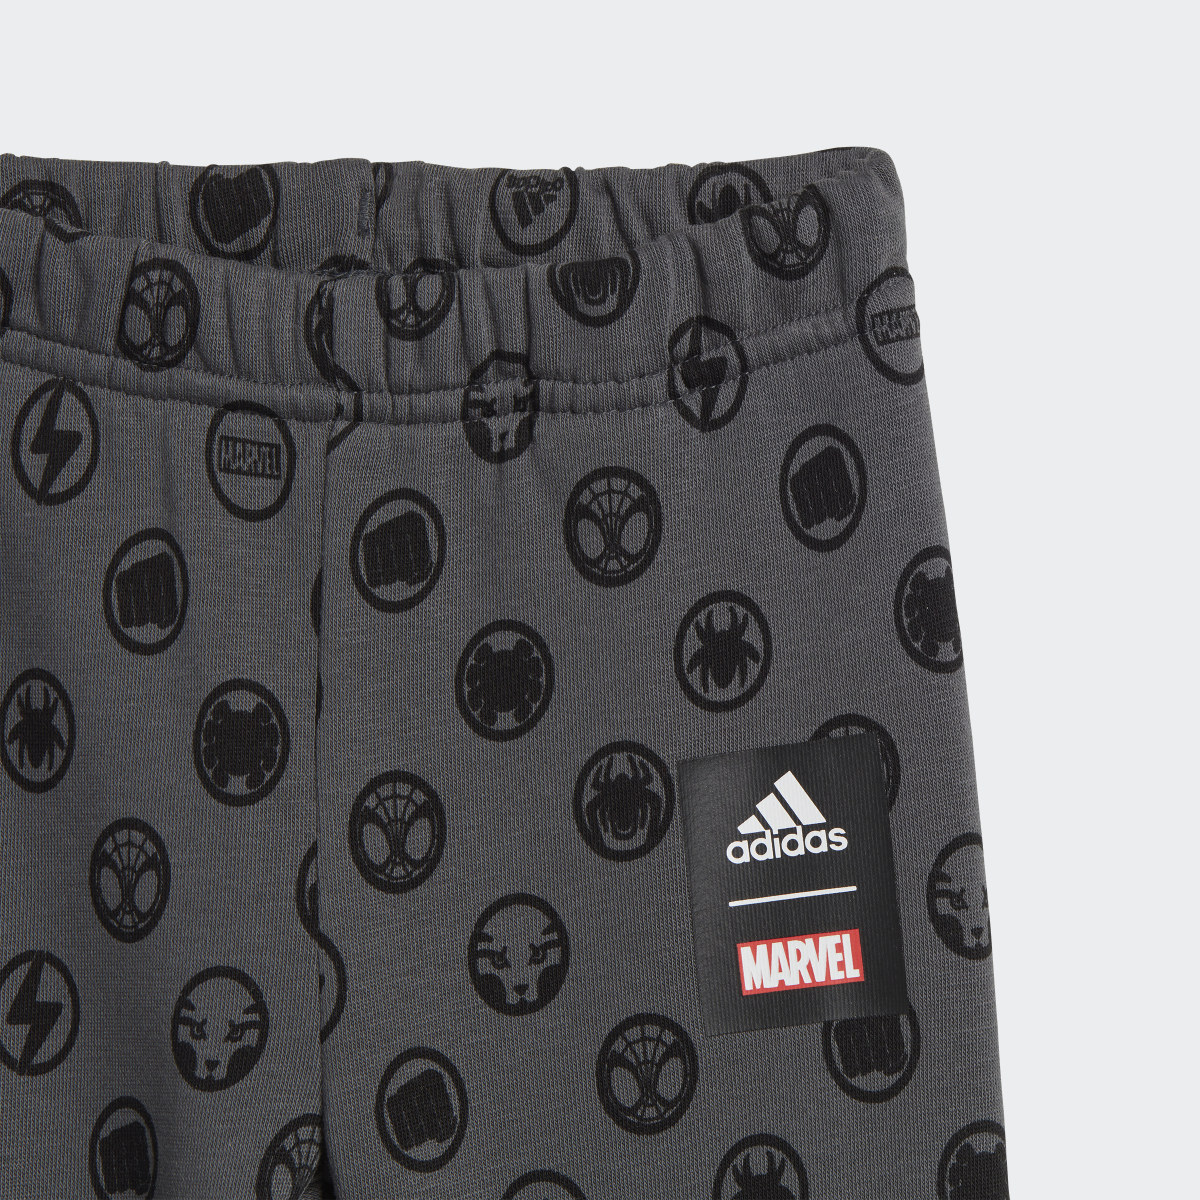 Adidas Calças Spider-Man adidas x Marvel. 9